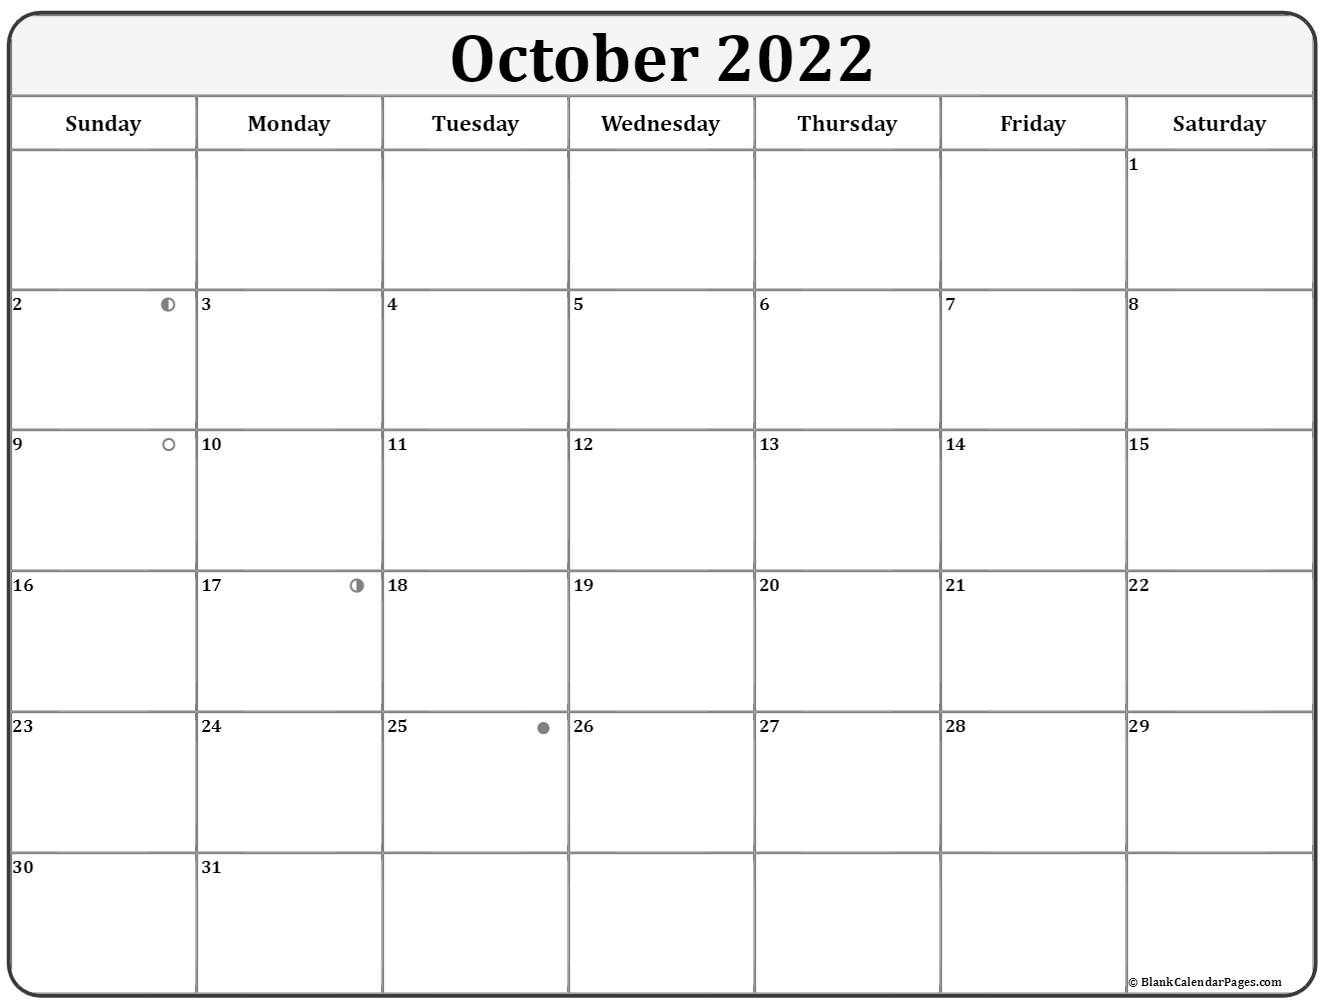 October 2022 Lunar Calendar | Moon Phase Calendar  Lunar Calendar 2022 May